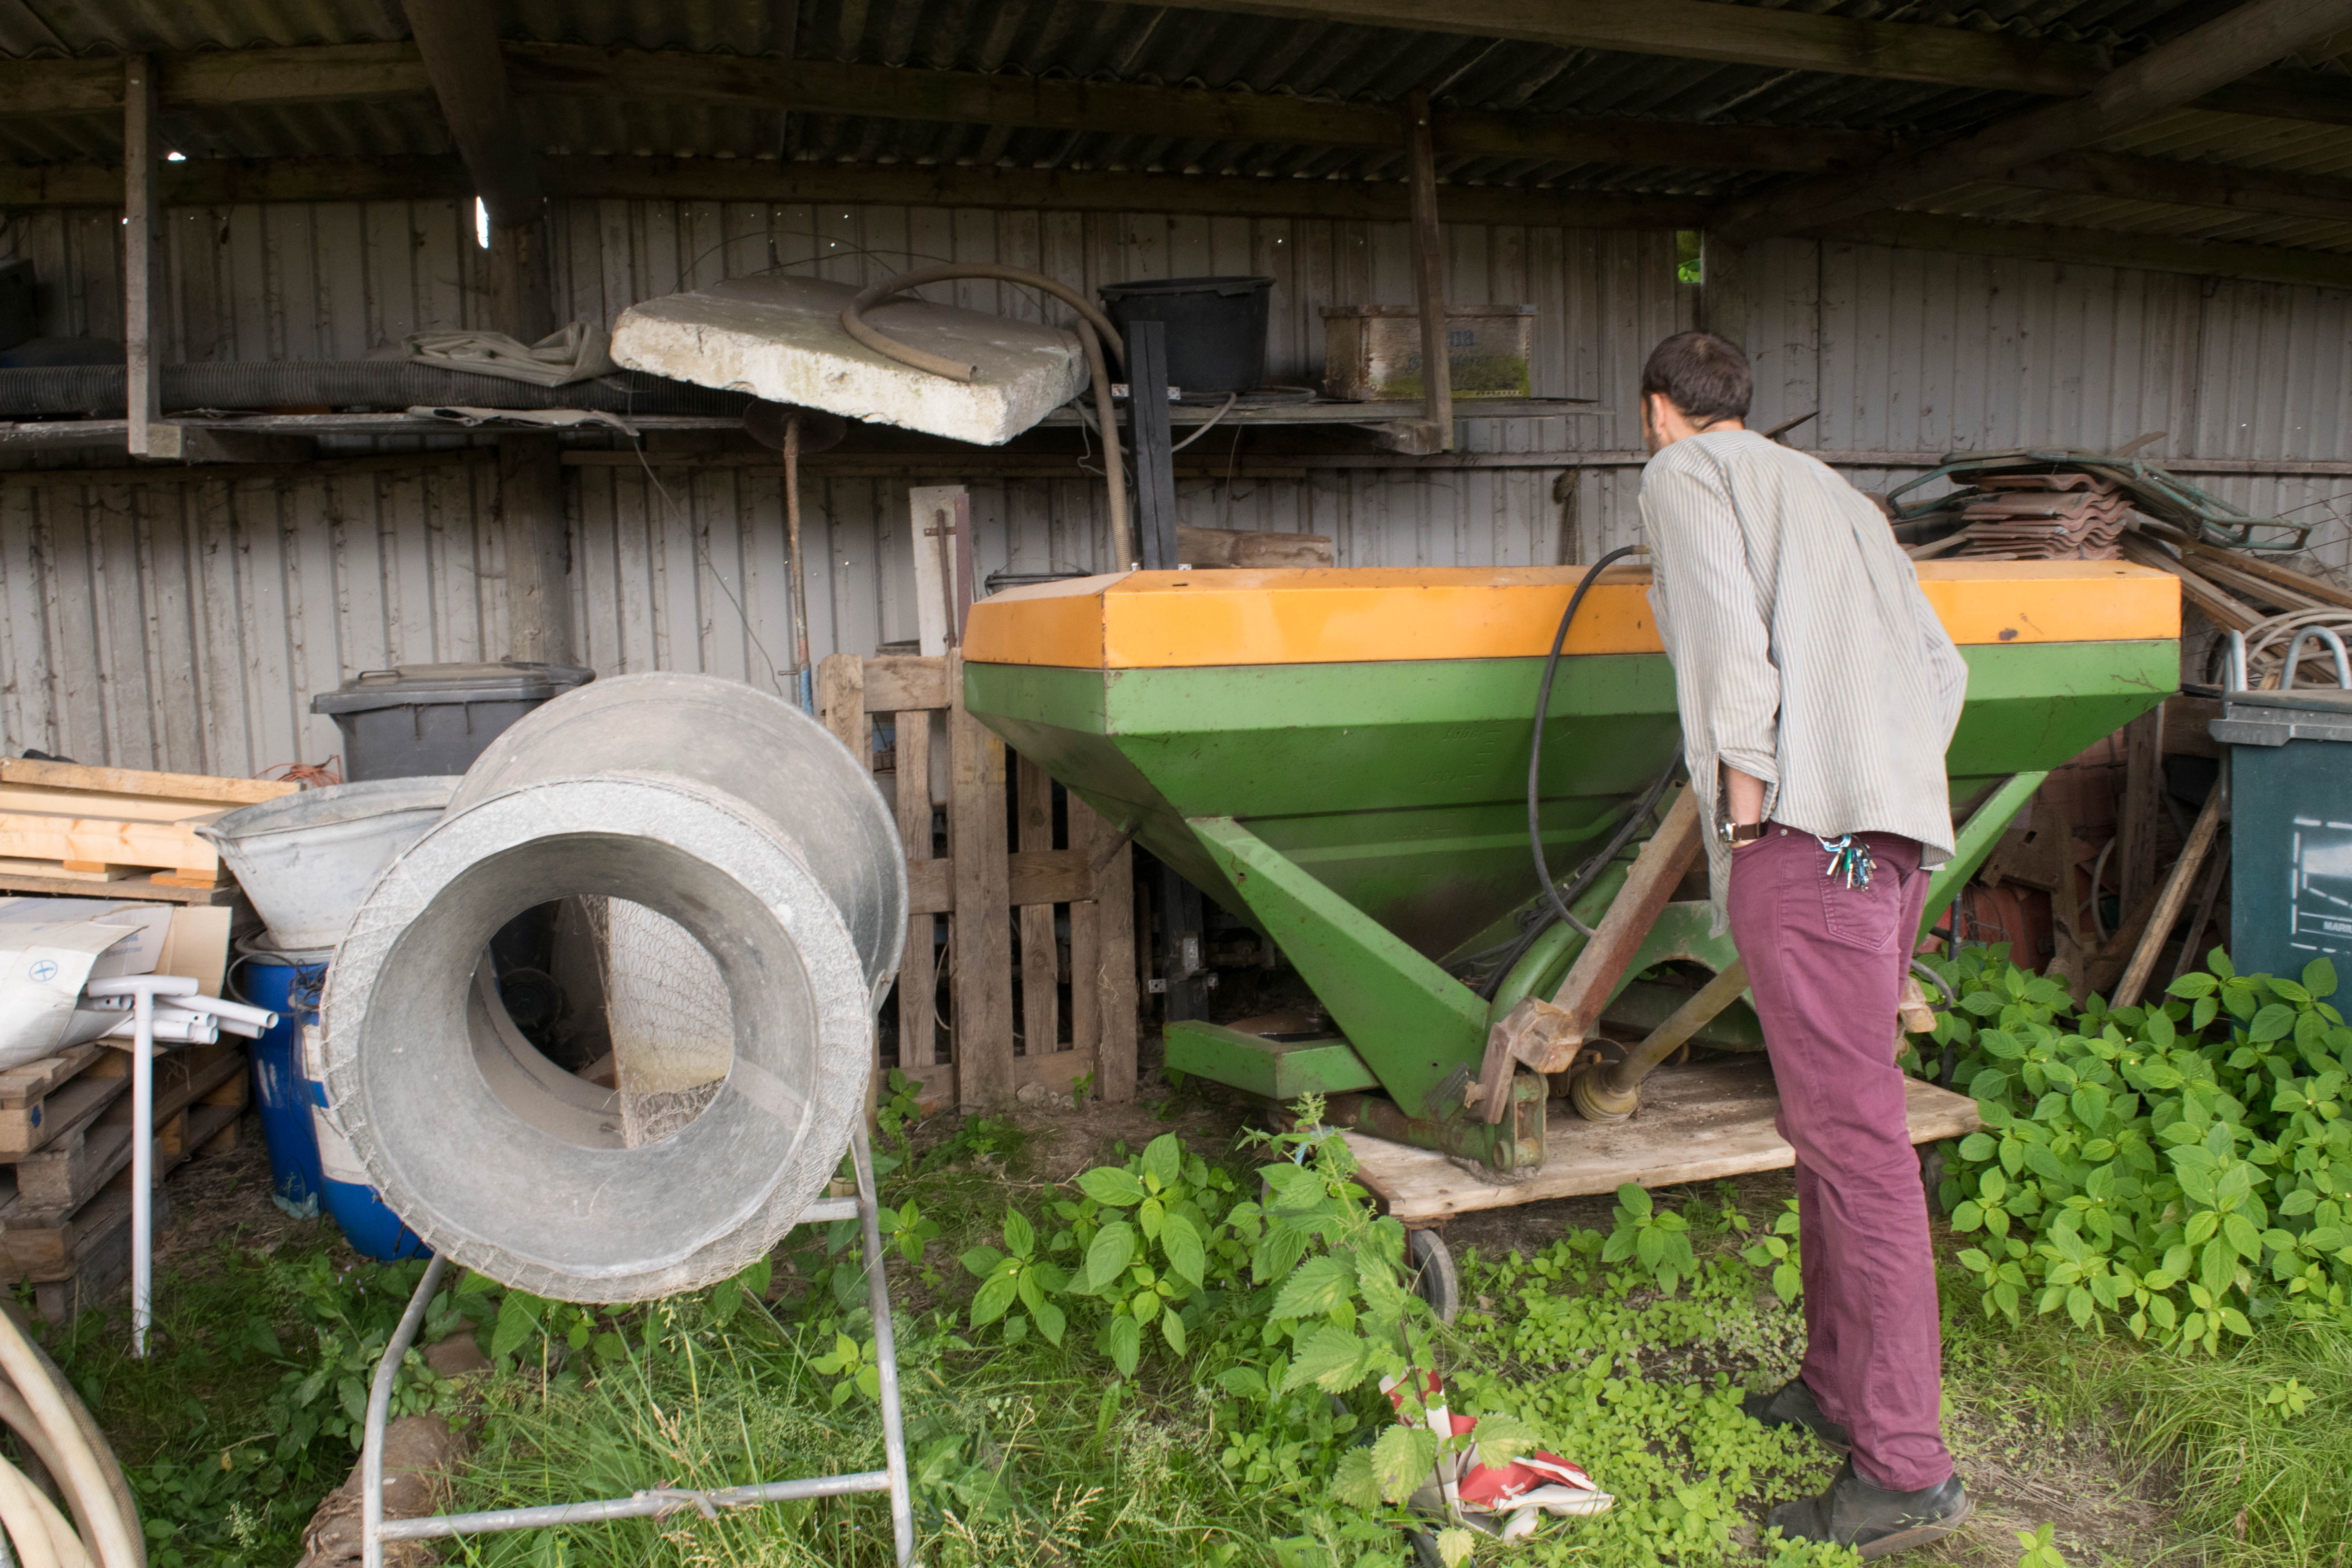 me looking at a large mechanical fertilizer at Paul's farm